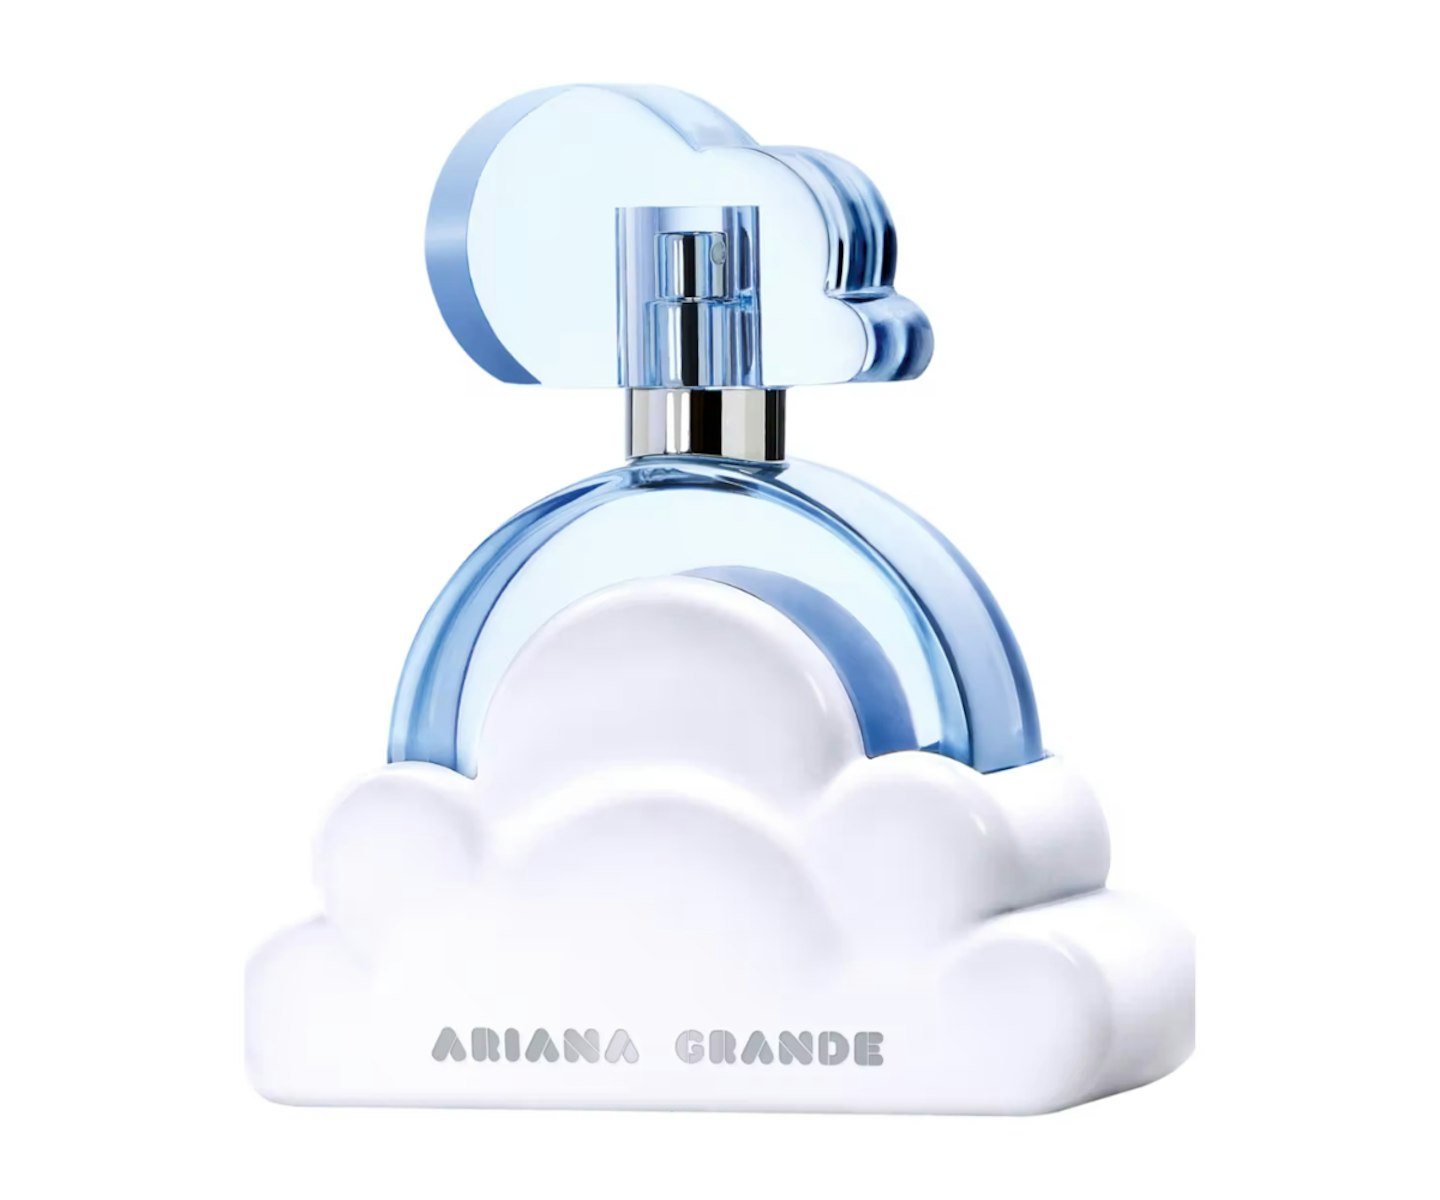  Ariana Grande Cloud Eau de Parfum